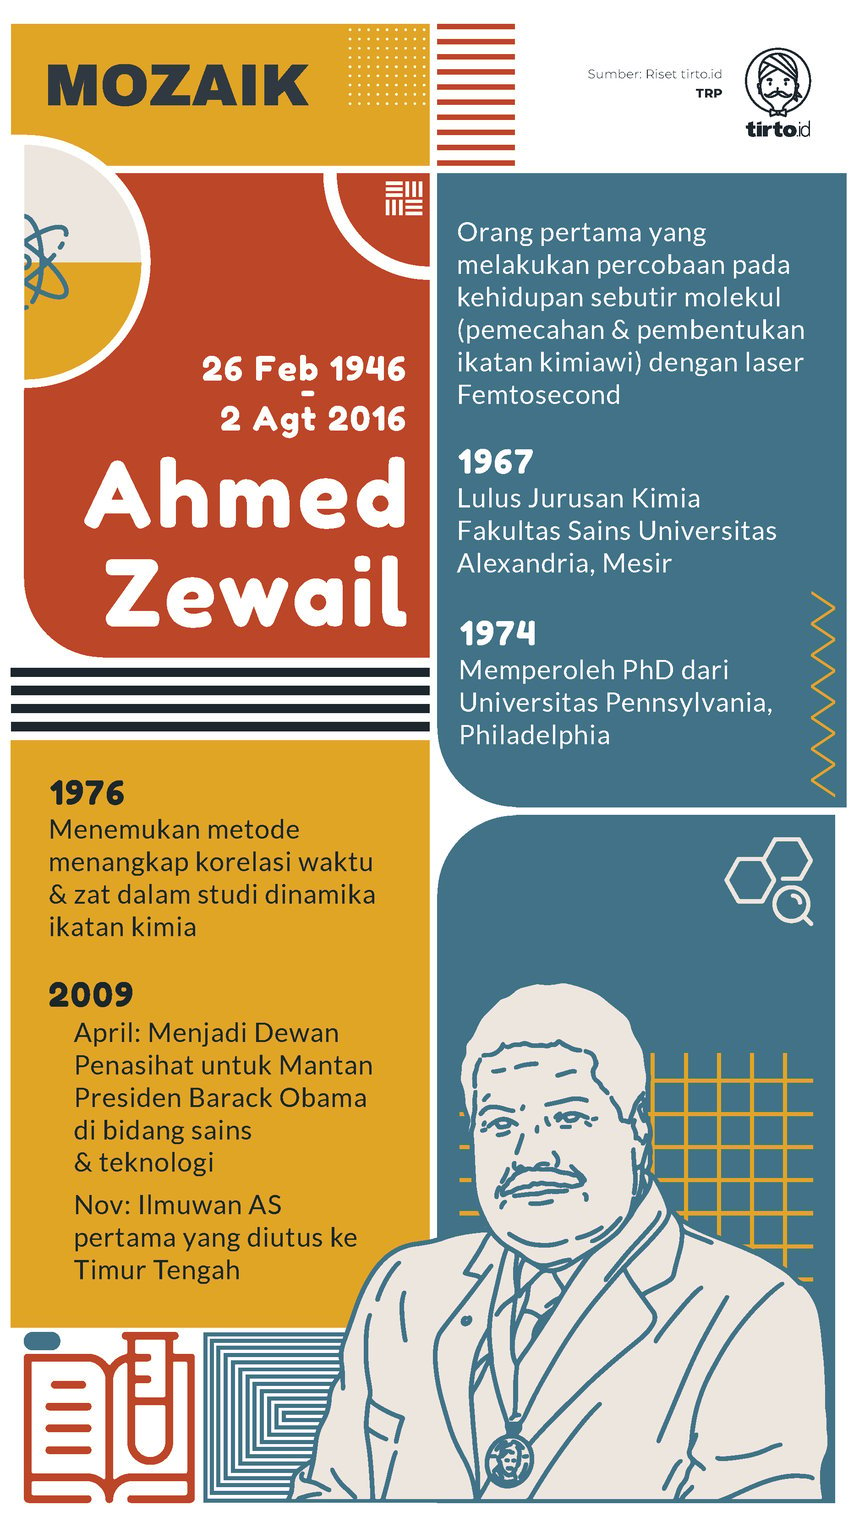 Infografik Mozaik Ahmed Zewail